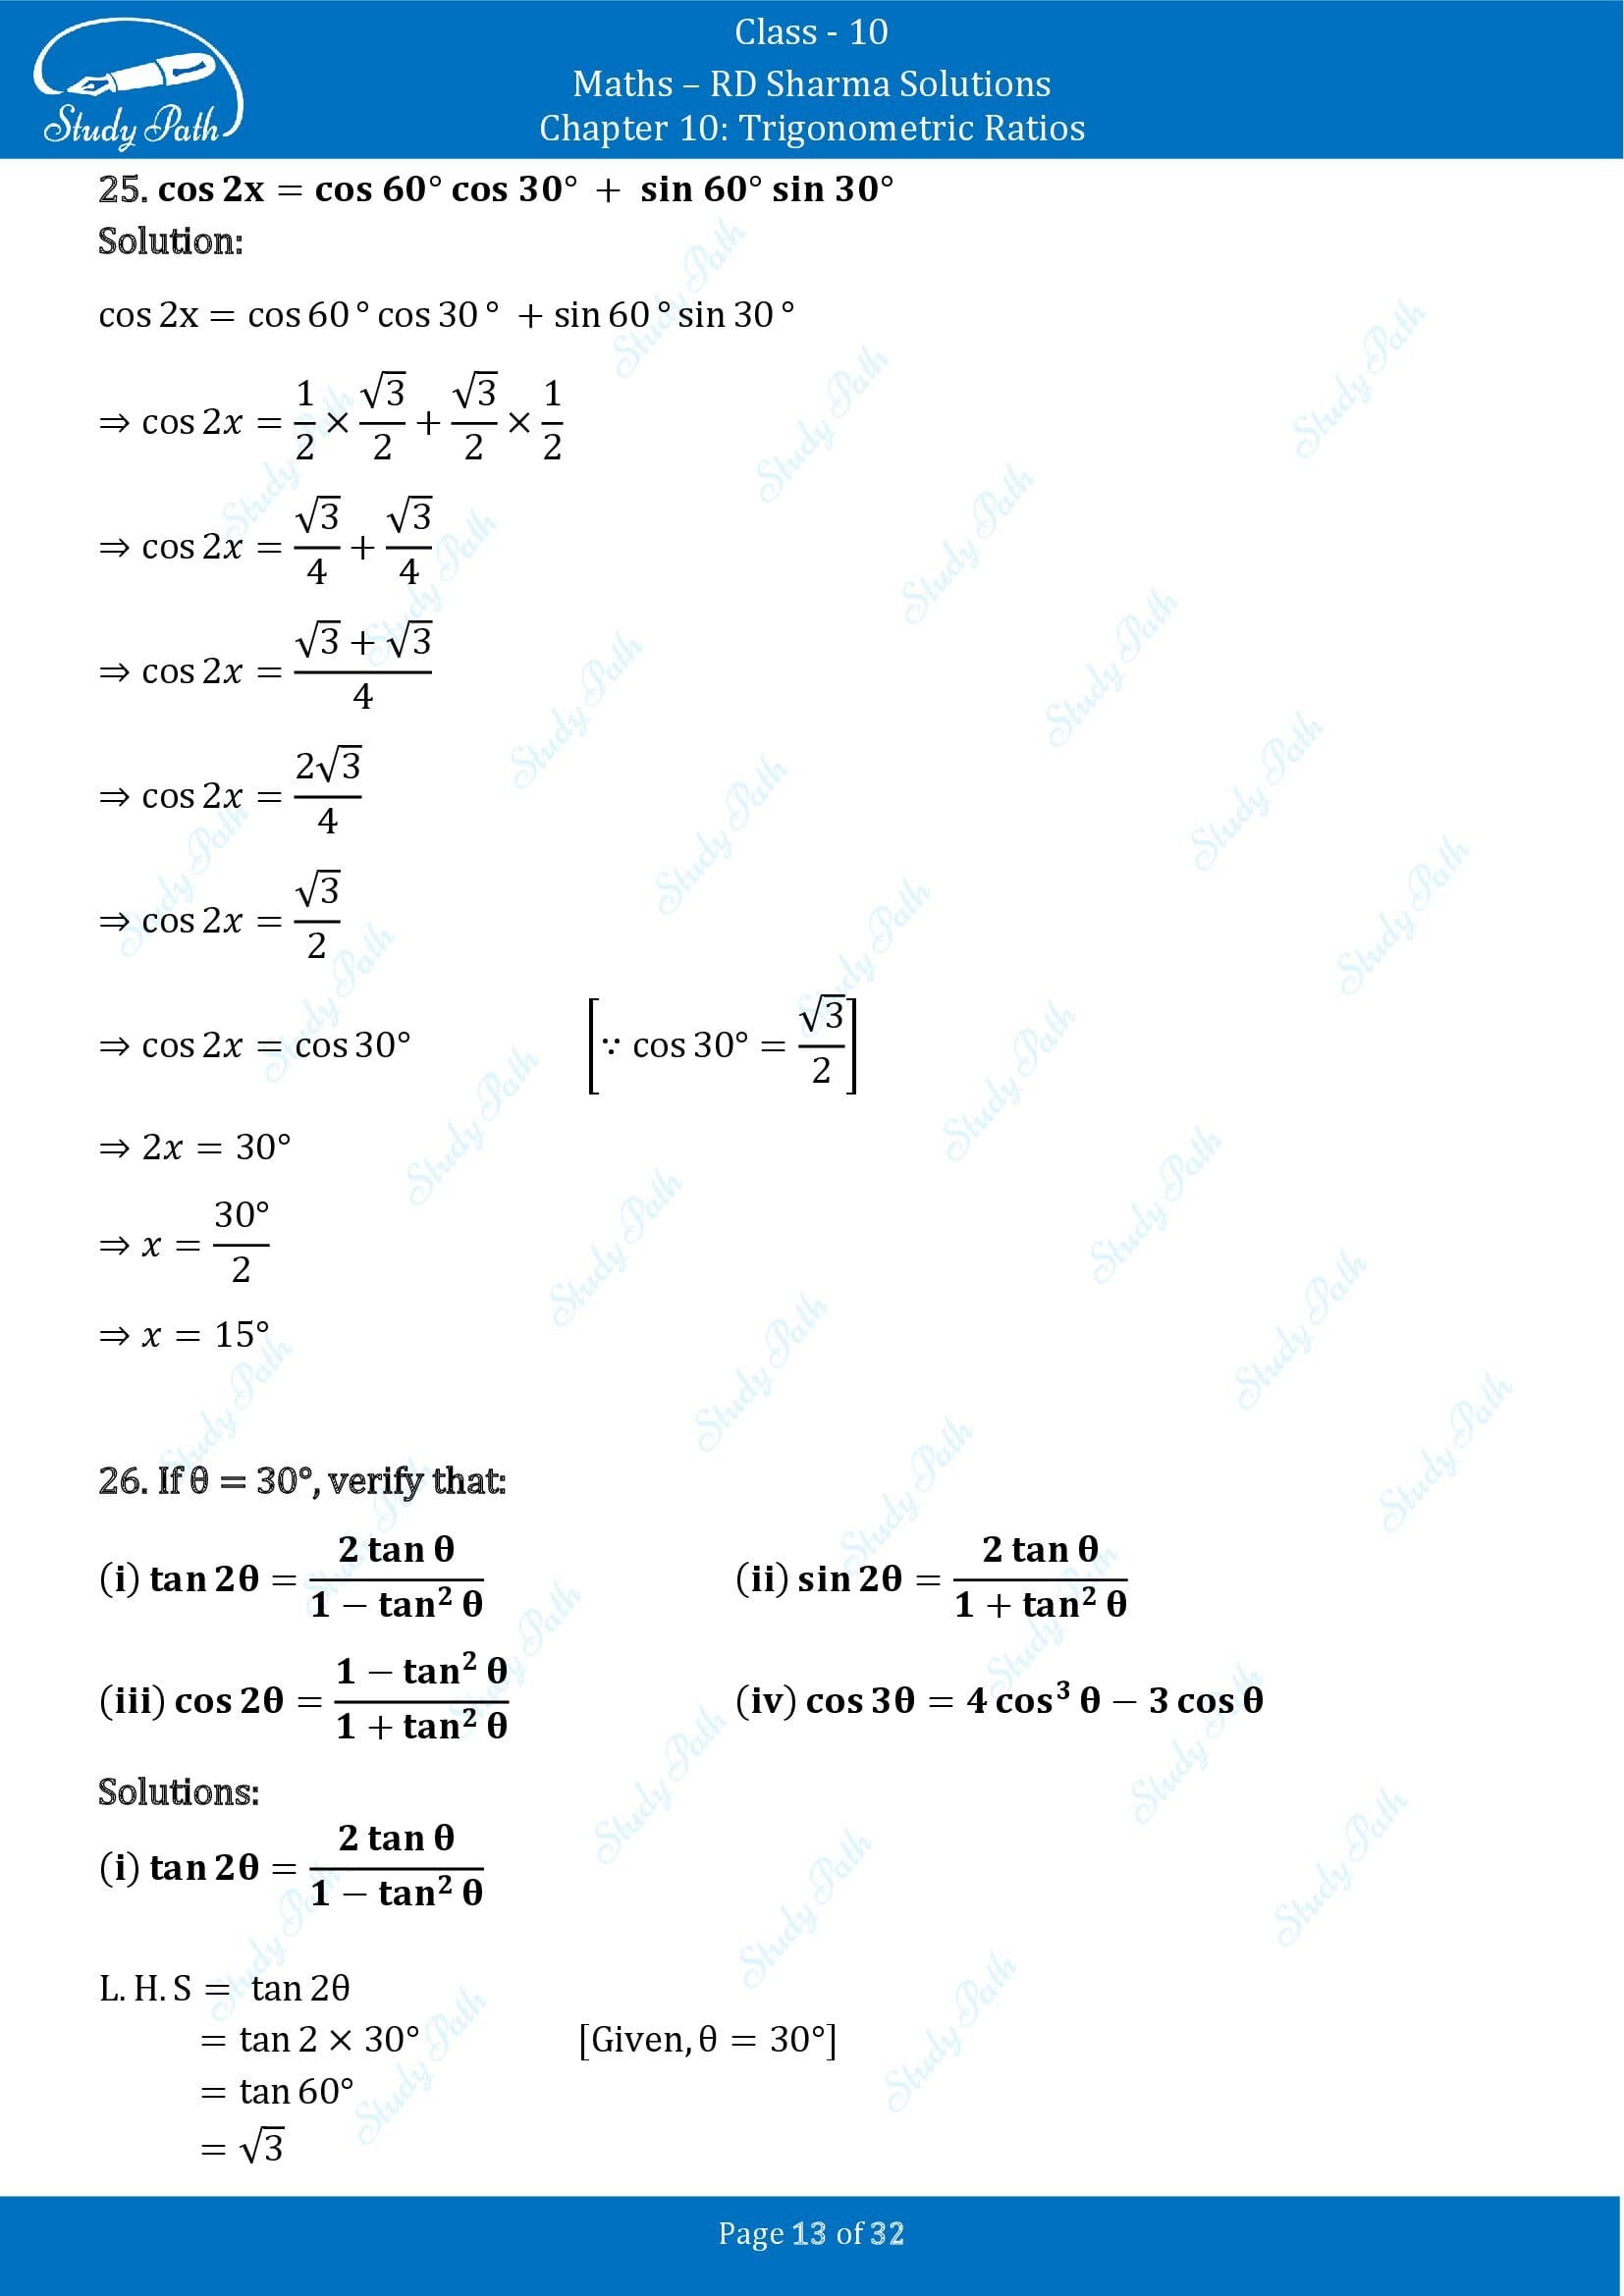 RD Sharma Solutions Class 10 Chapter 10 Trigonometric Ratios Exercise 10.2 00013